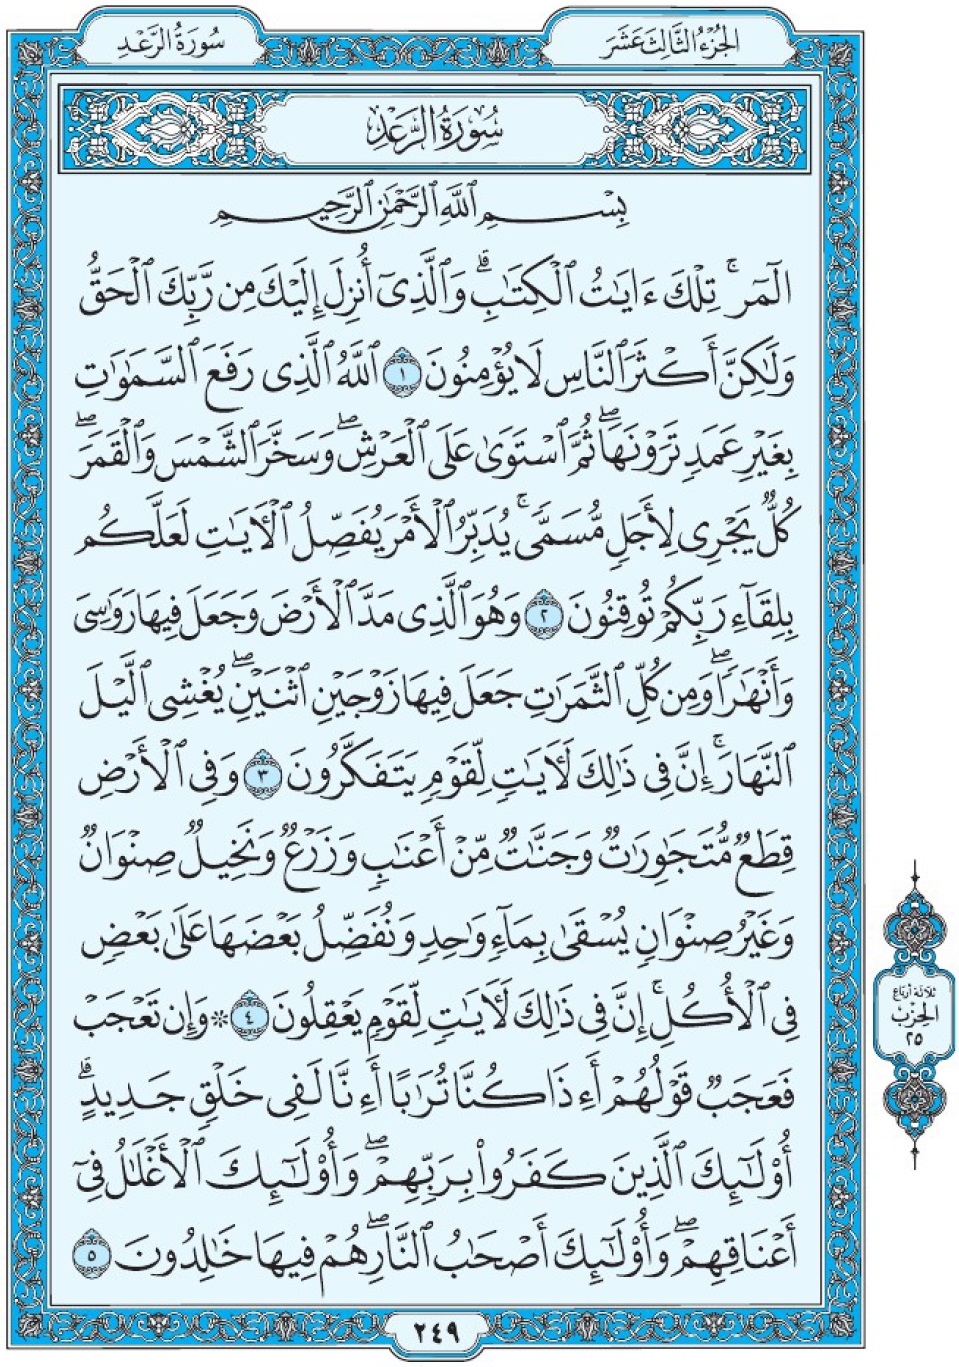 Коран Мединский мусхаф страница 249, сура 13 Ар-Ра‘д سورة ١٣ الرعد 